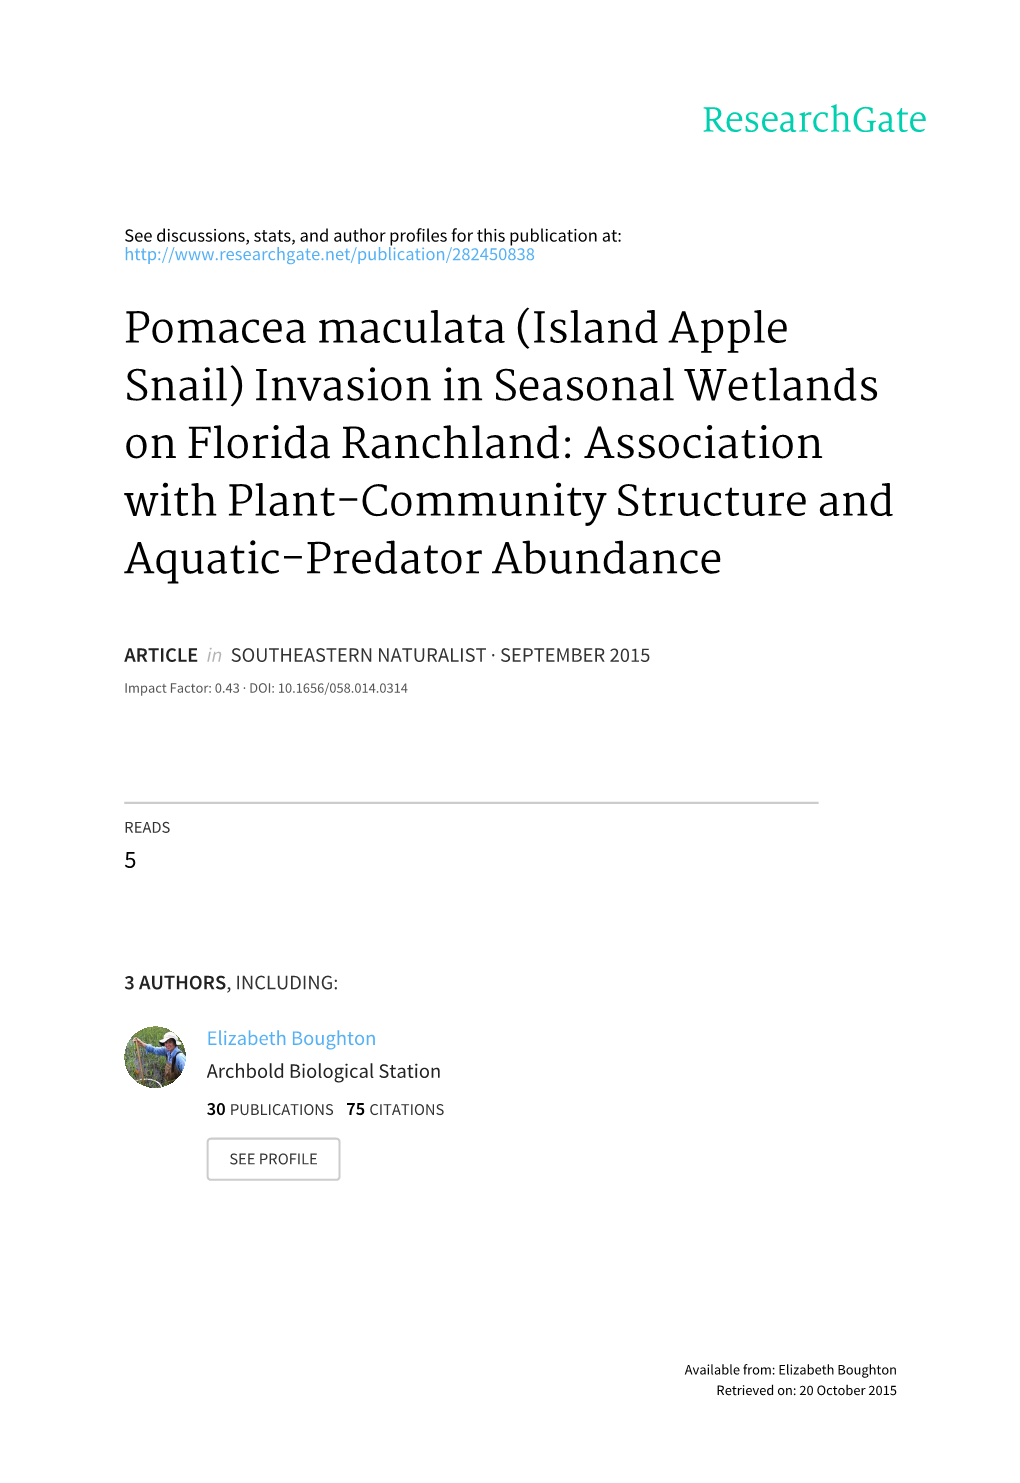 Pomacea Maculata (Island Apple Snail) Invasion in Seasonal Wetlands on Florida Ranchland: Association with Plant-Community Structure and Aquatic-Predator Abundance